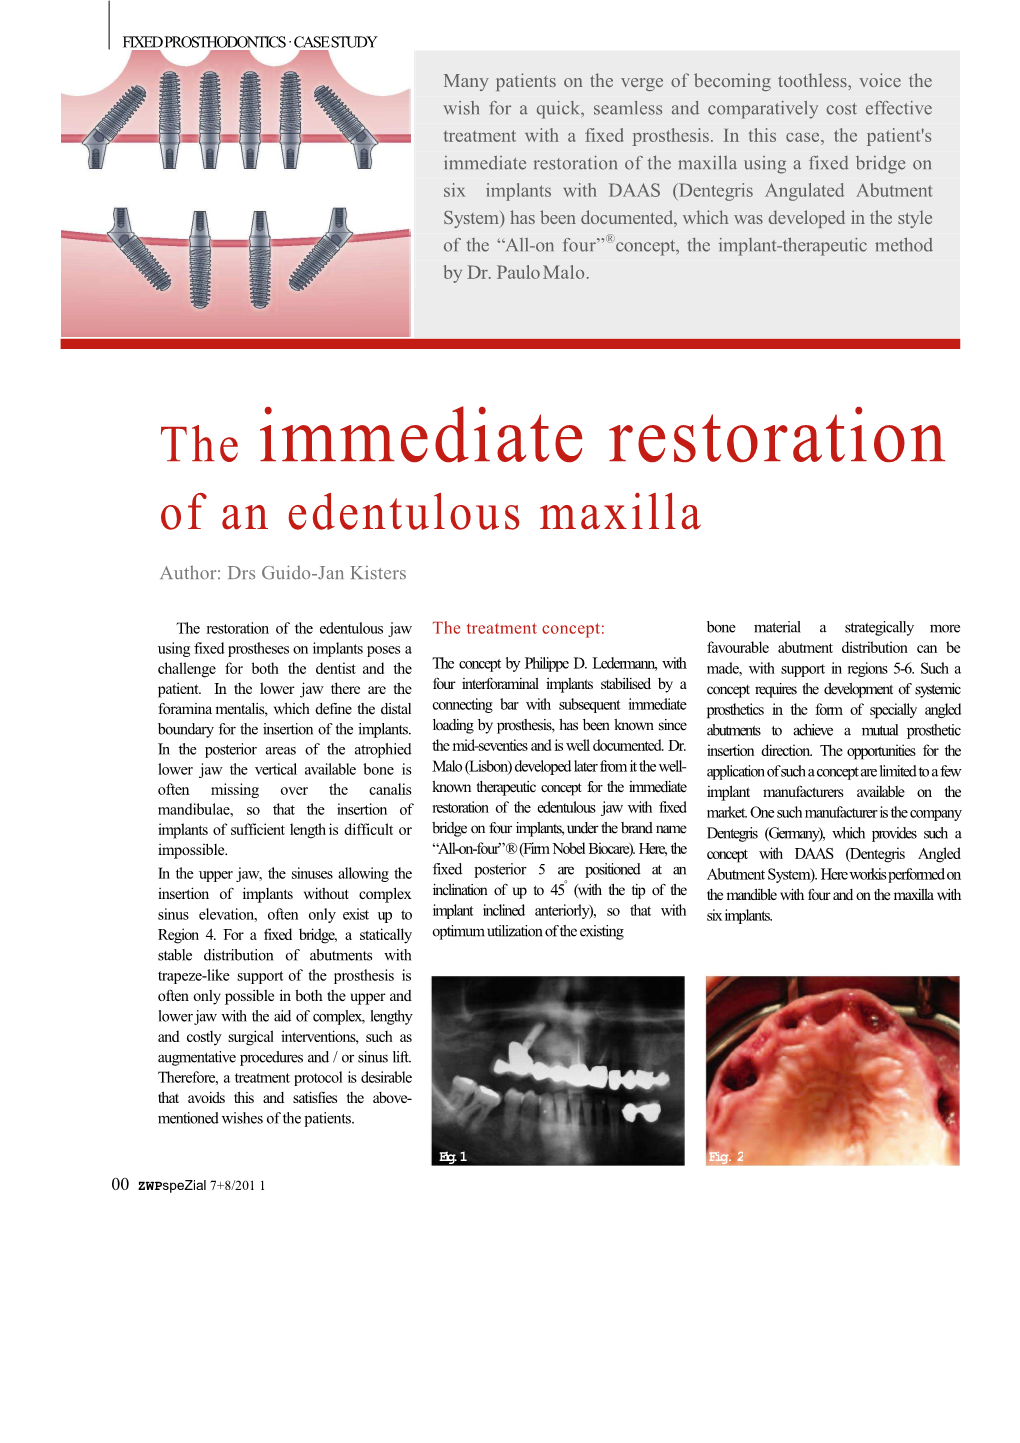 The Immediate Restoration of an Edentulous Maxilla